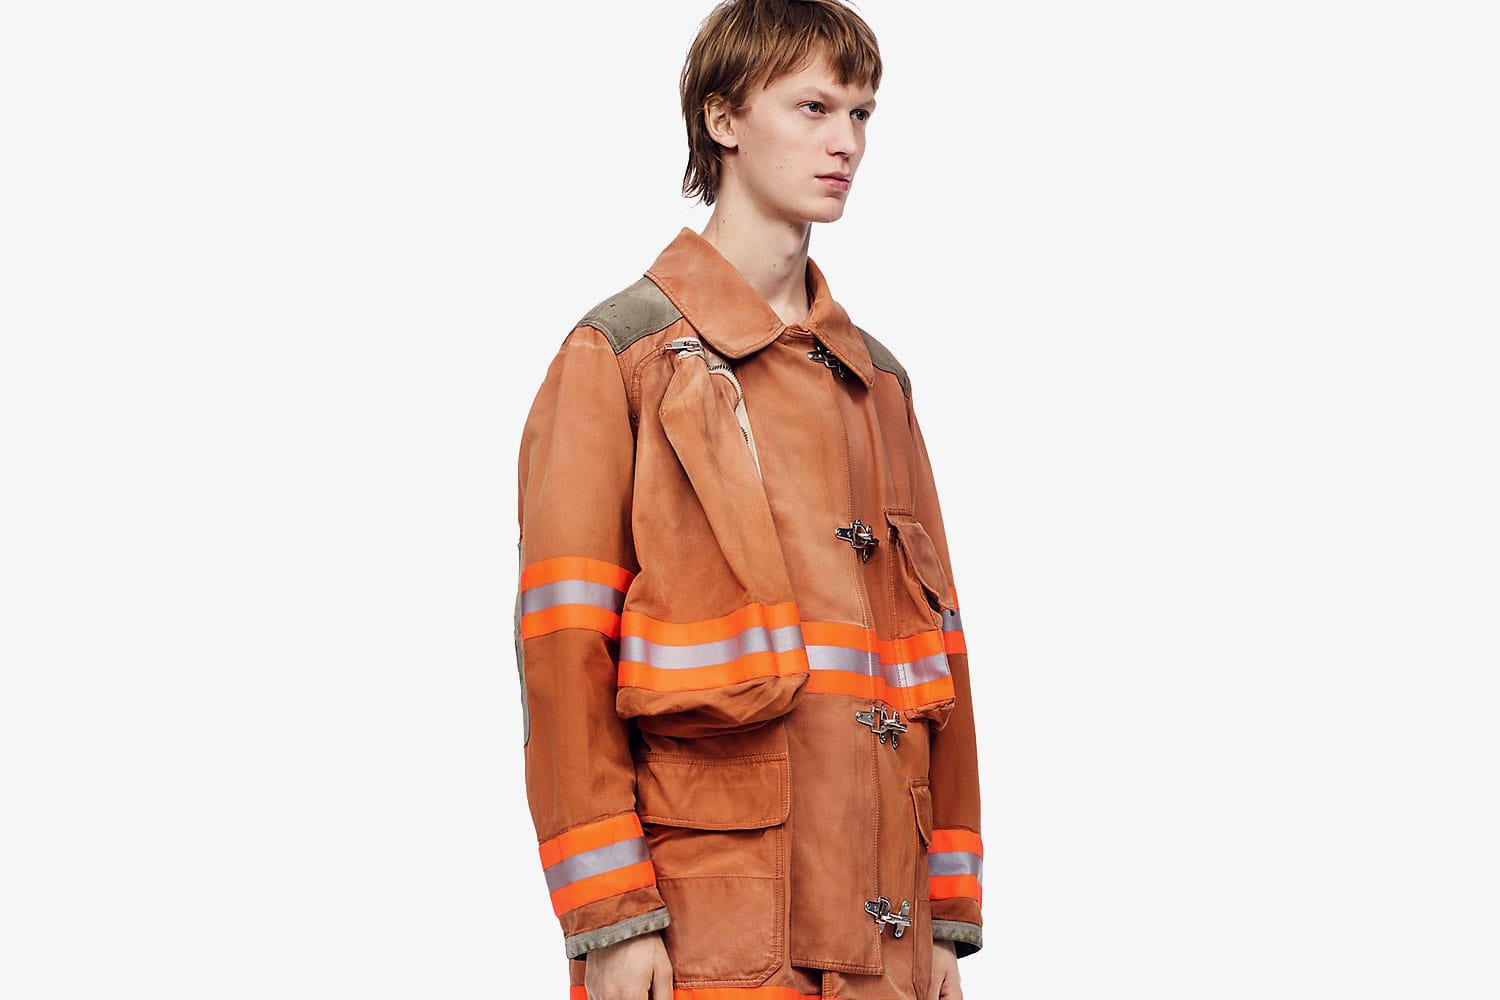 calvin klein fireman jacket